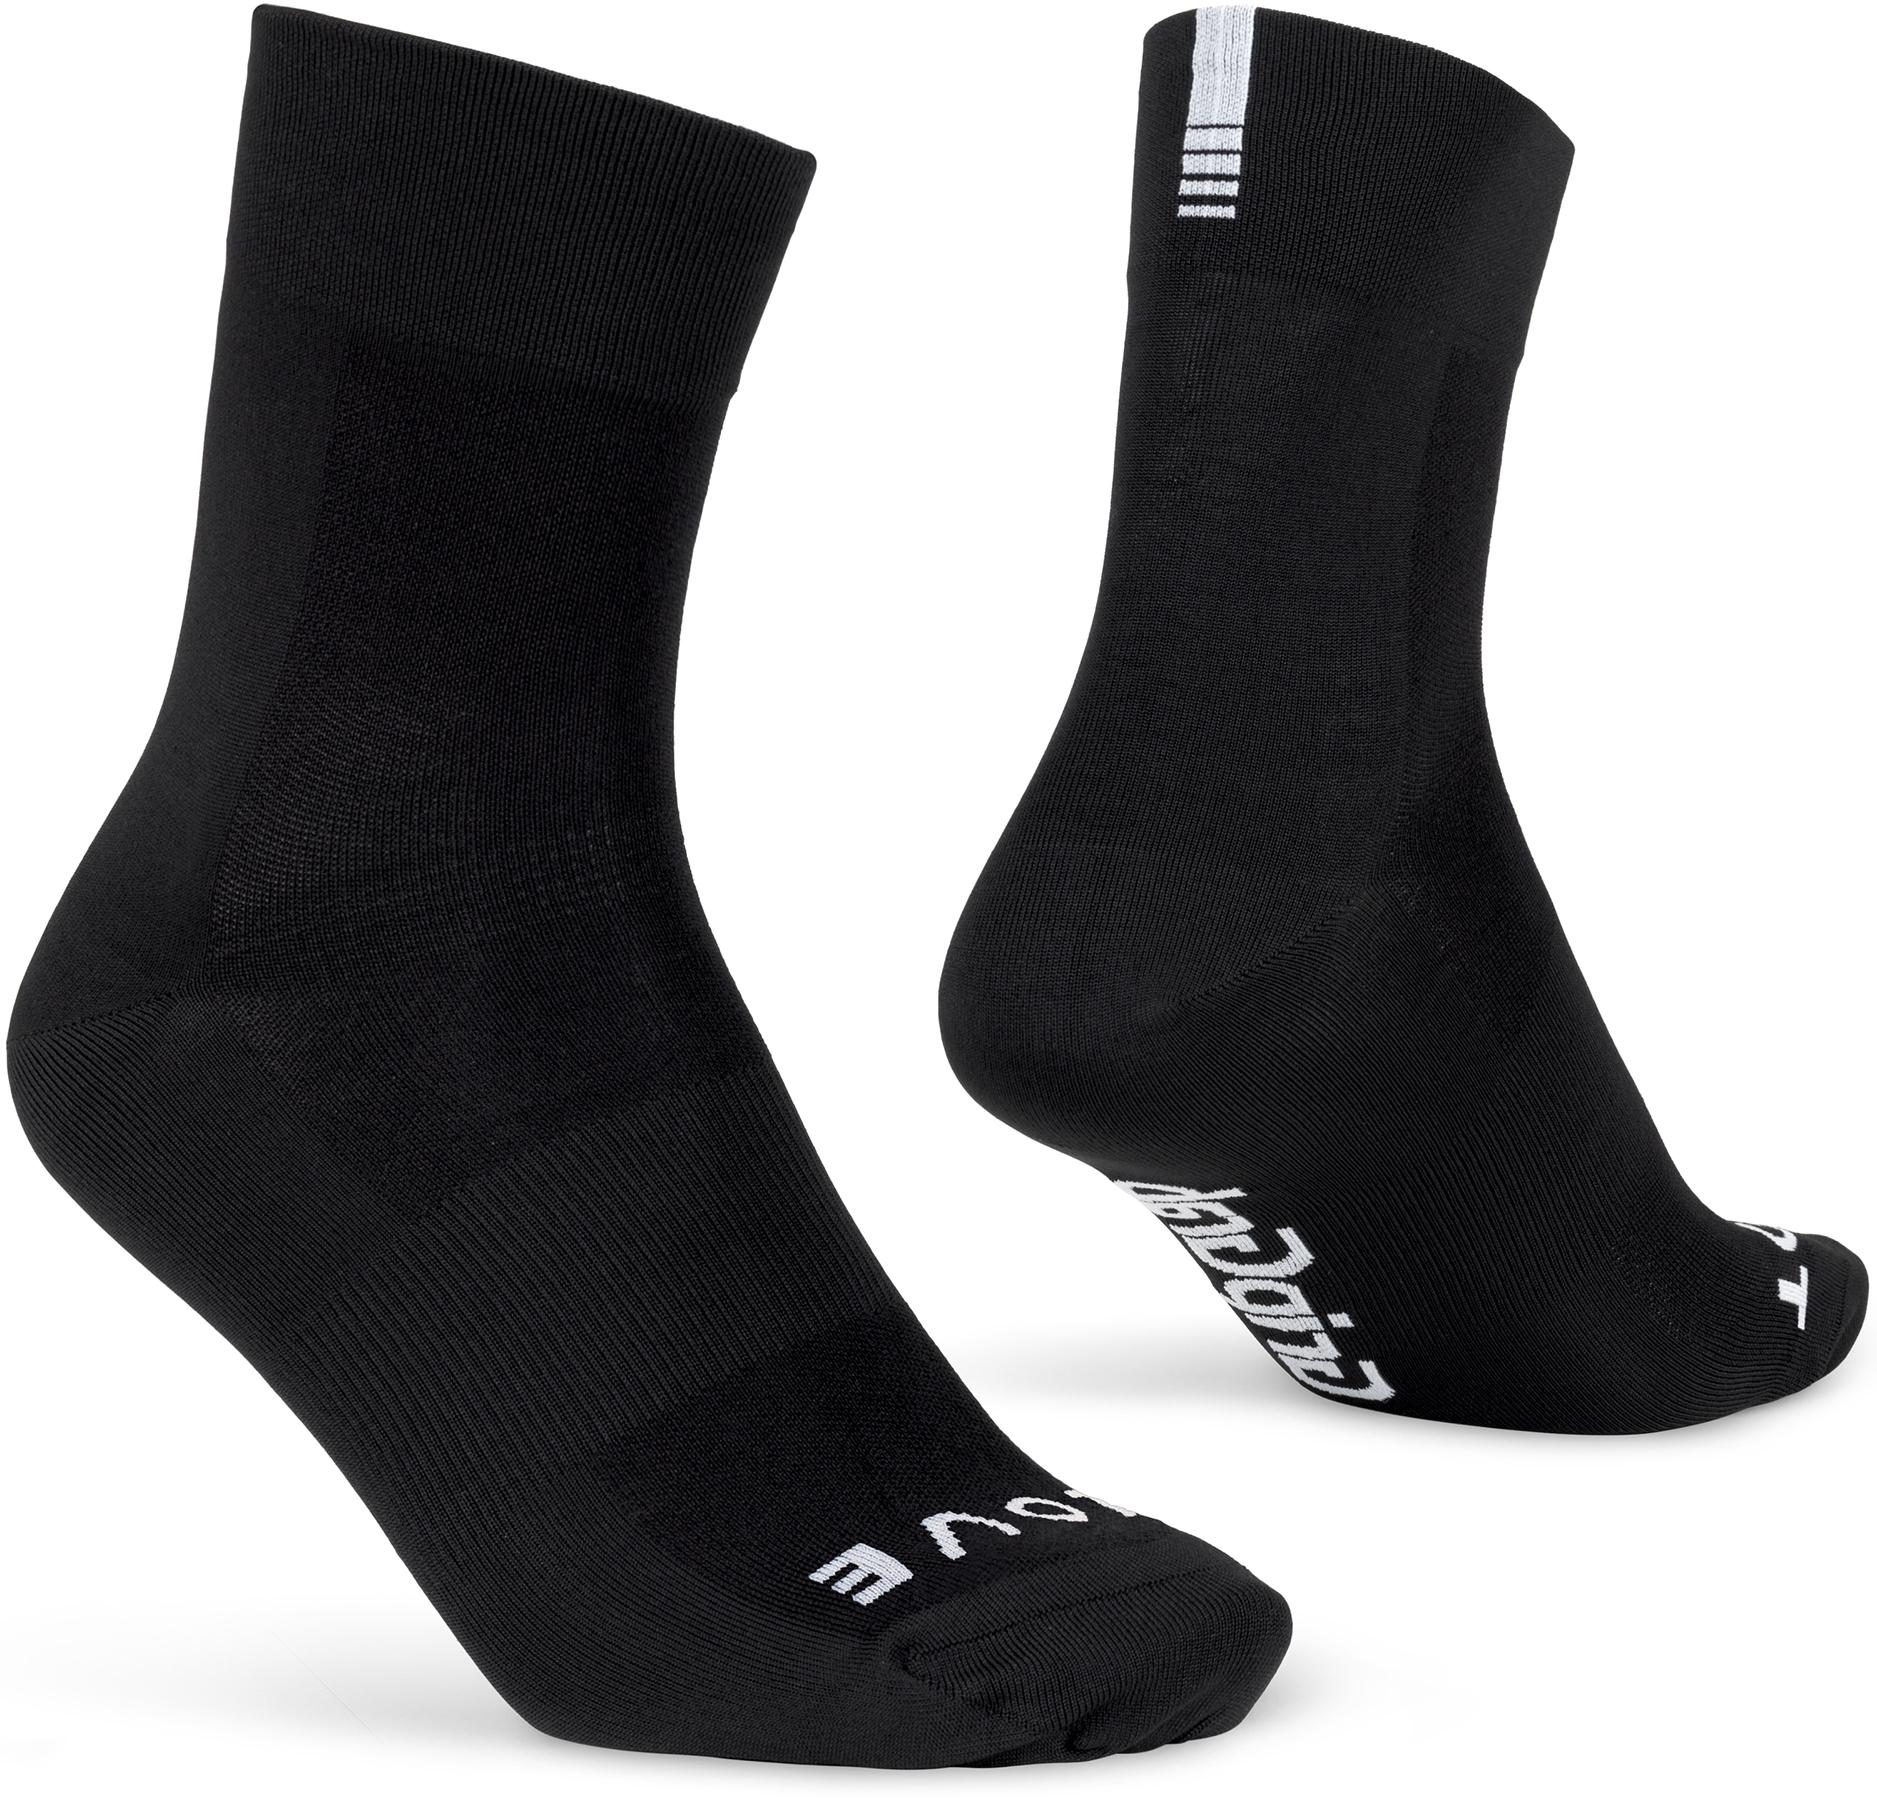 Gripgrab Lightweight Sl Socks - Black